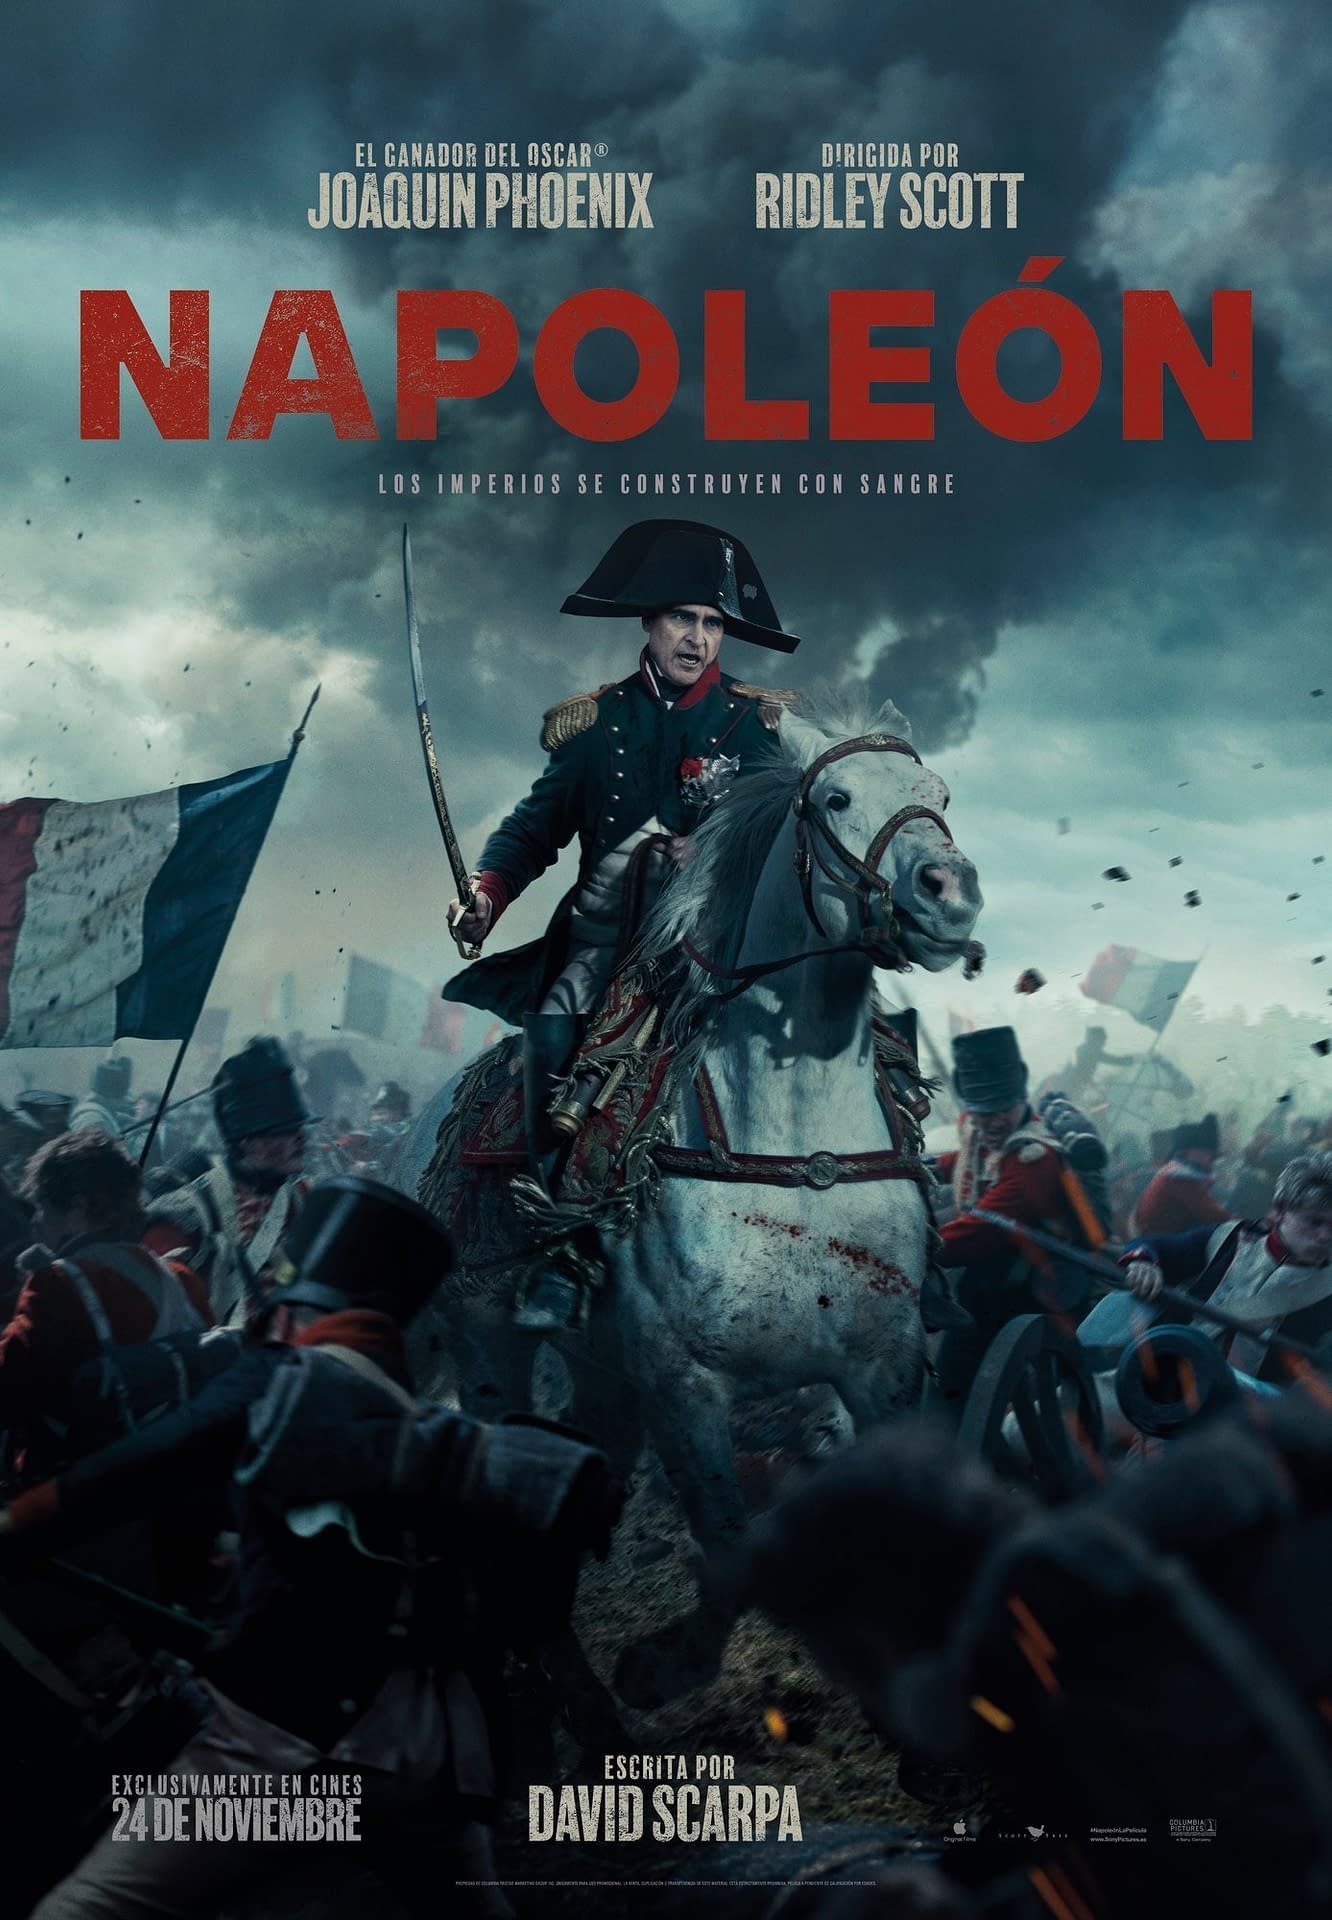 Napoleon Directors Cut Is Over 4 Hours, & New International Poster